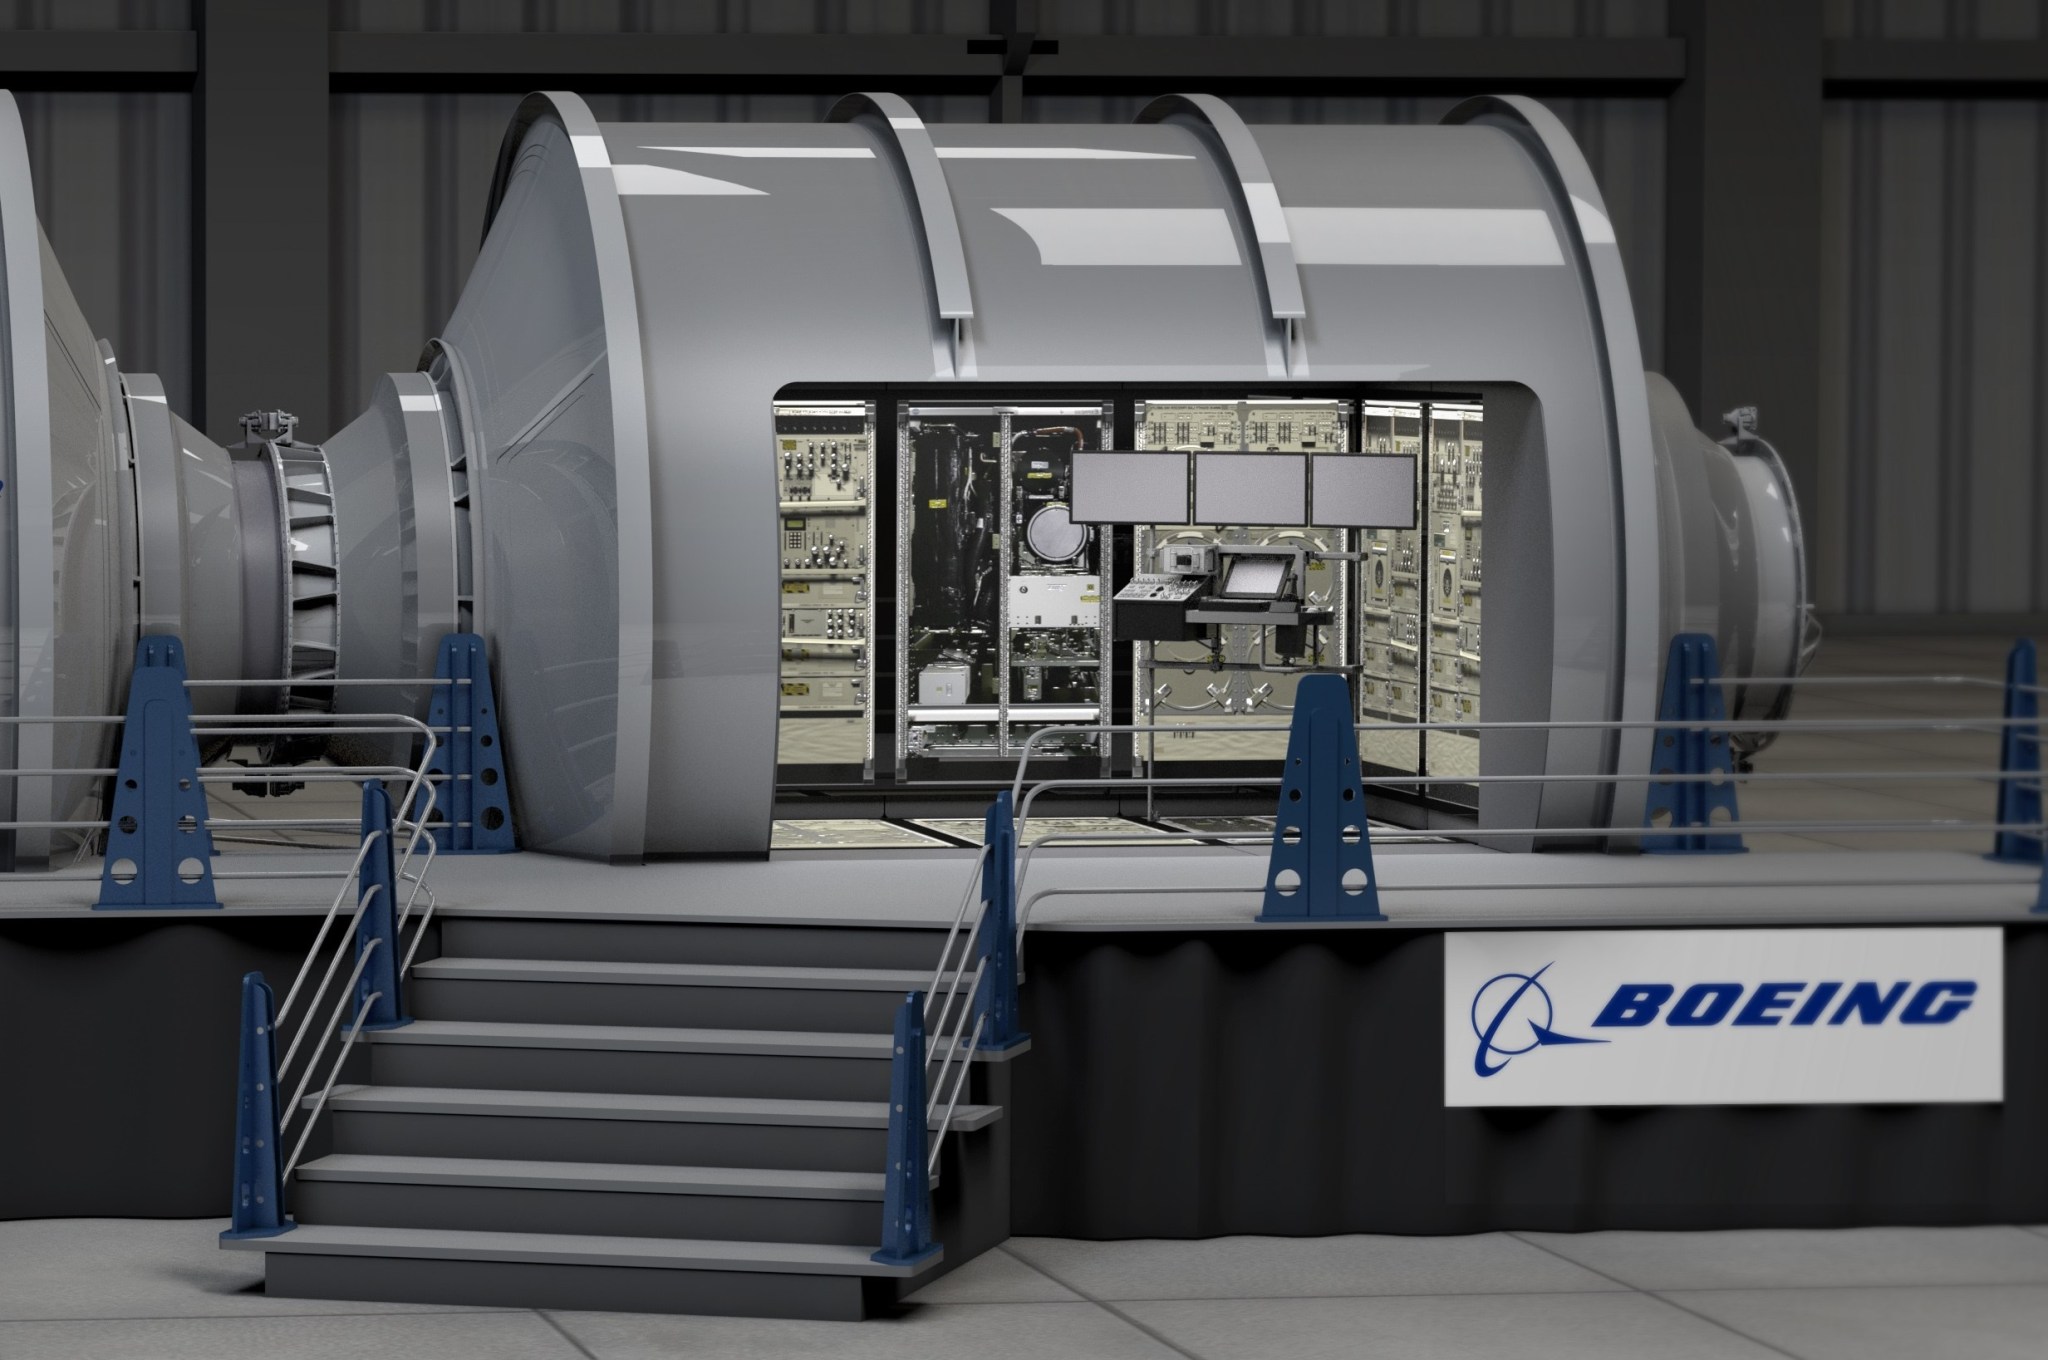 Concept image of Boeing's prototype habitation module. 